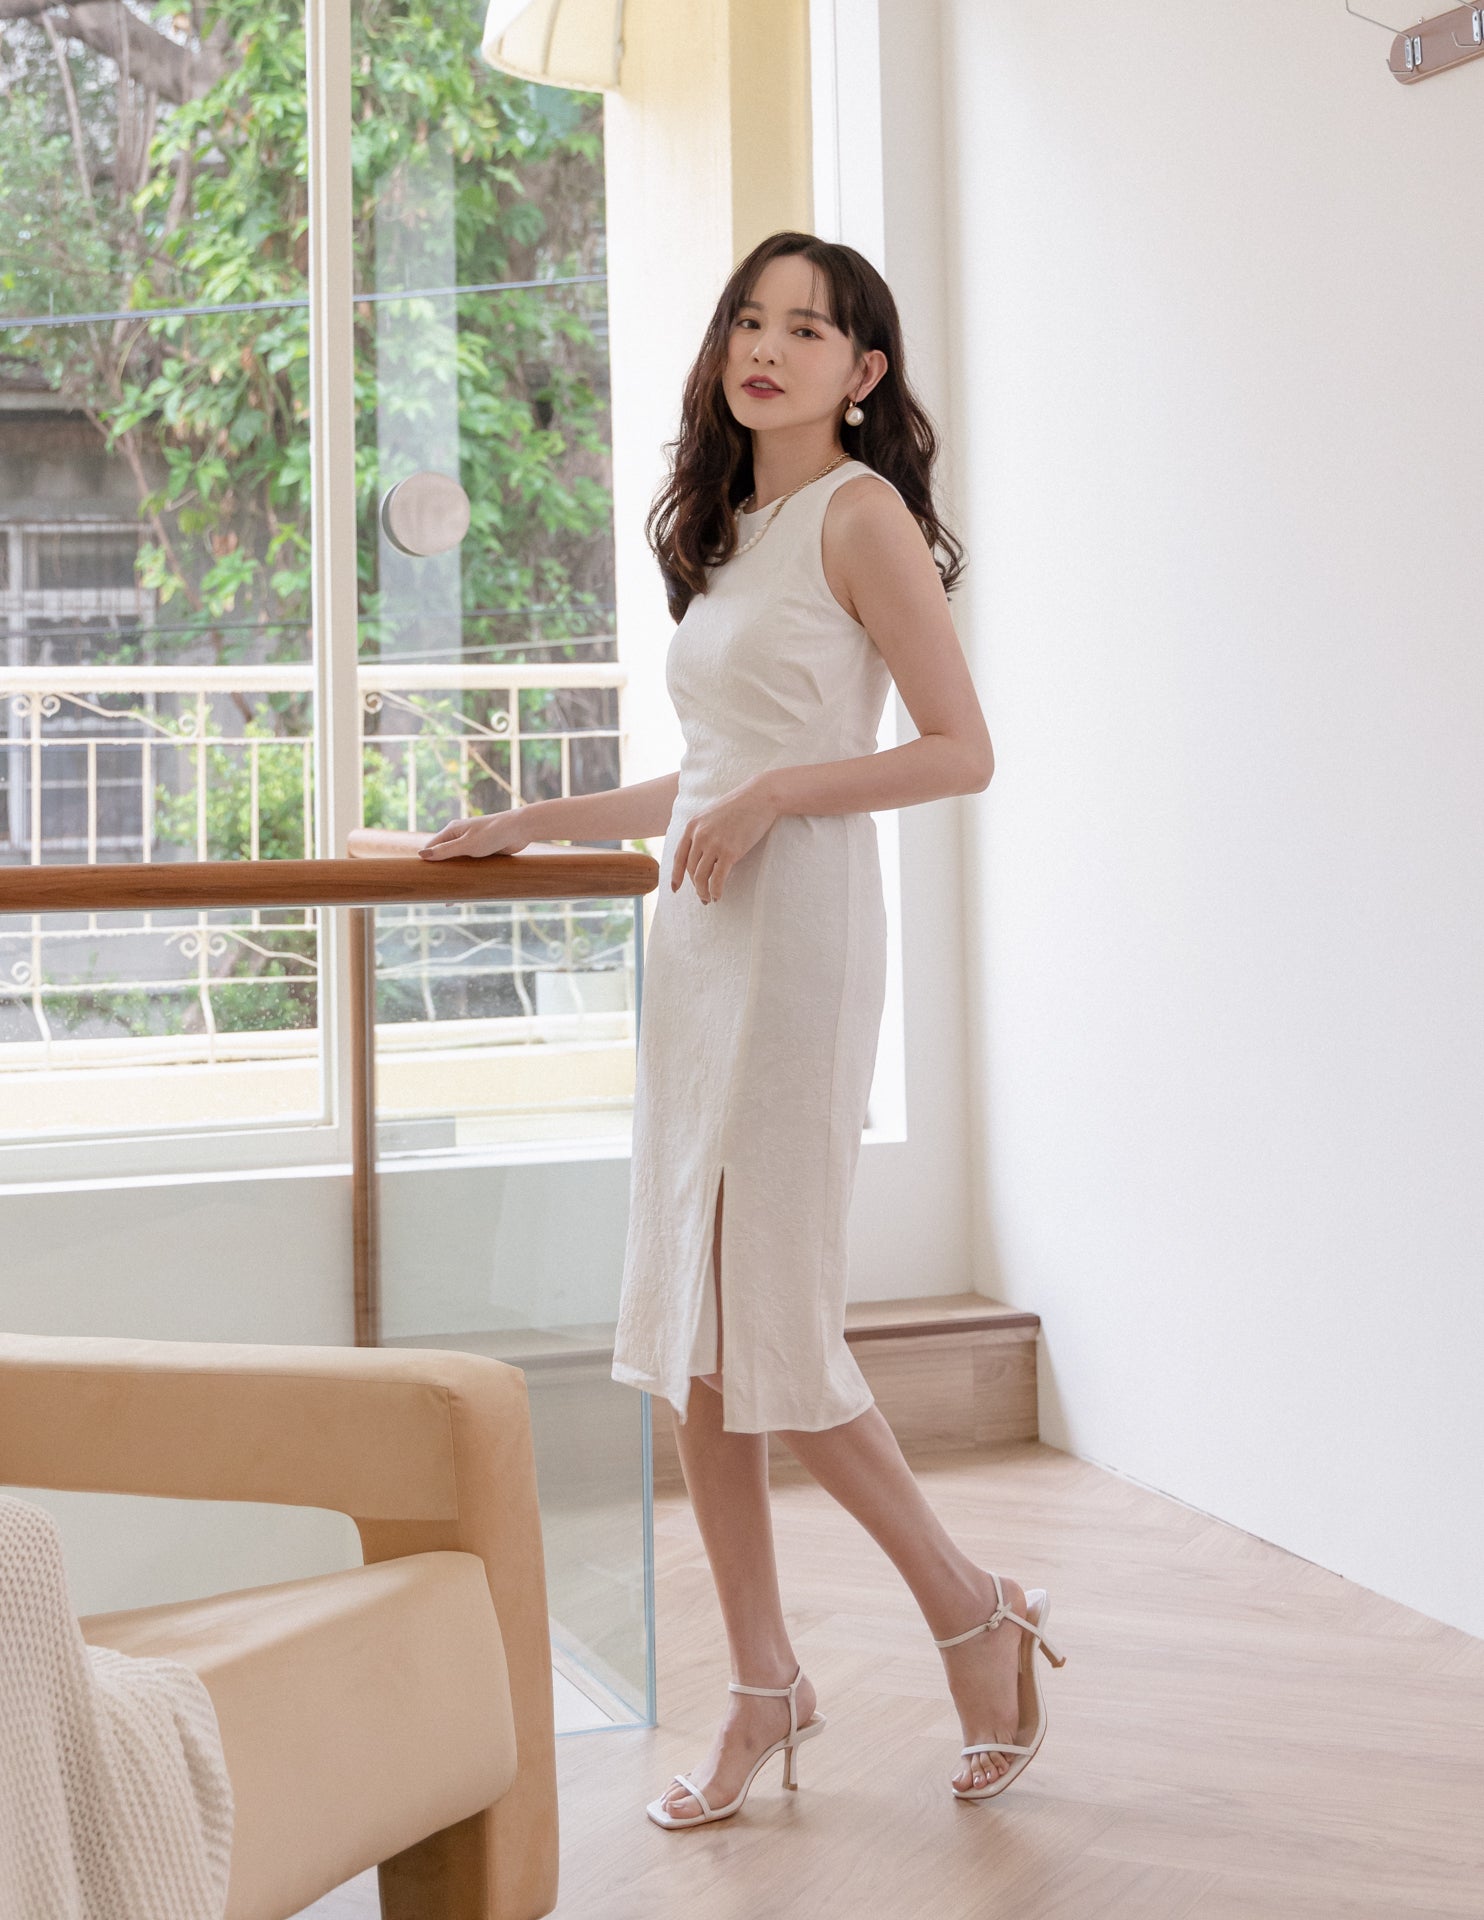 Yen Jacquard Dress in White